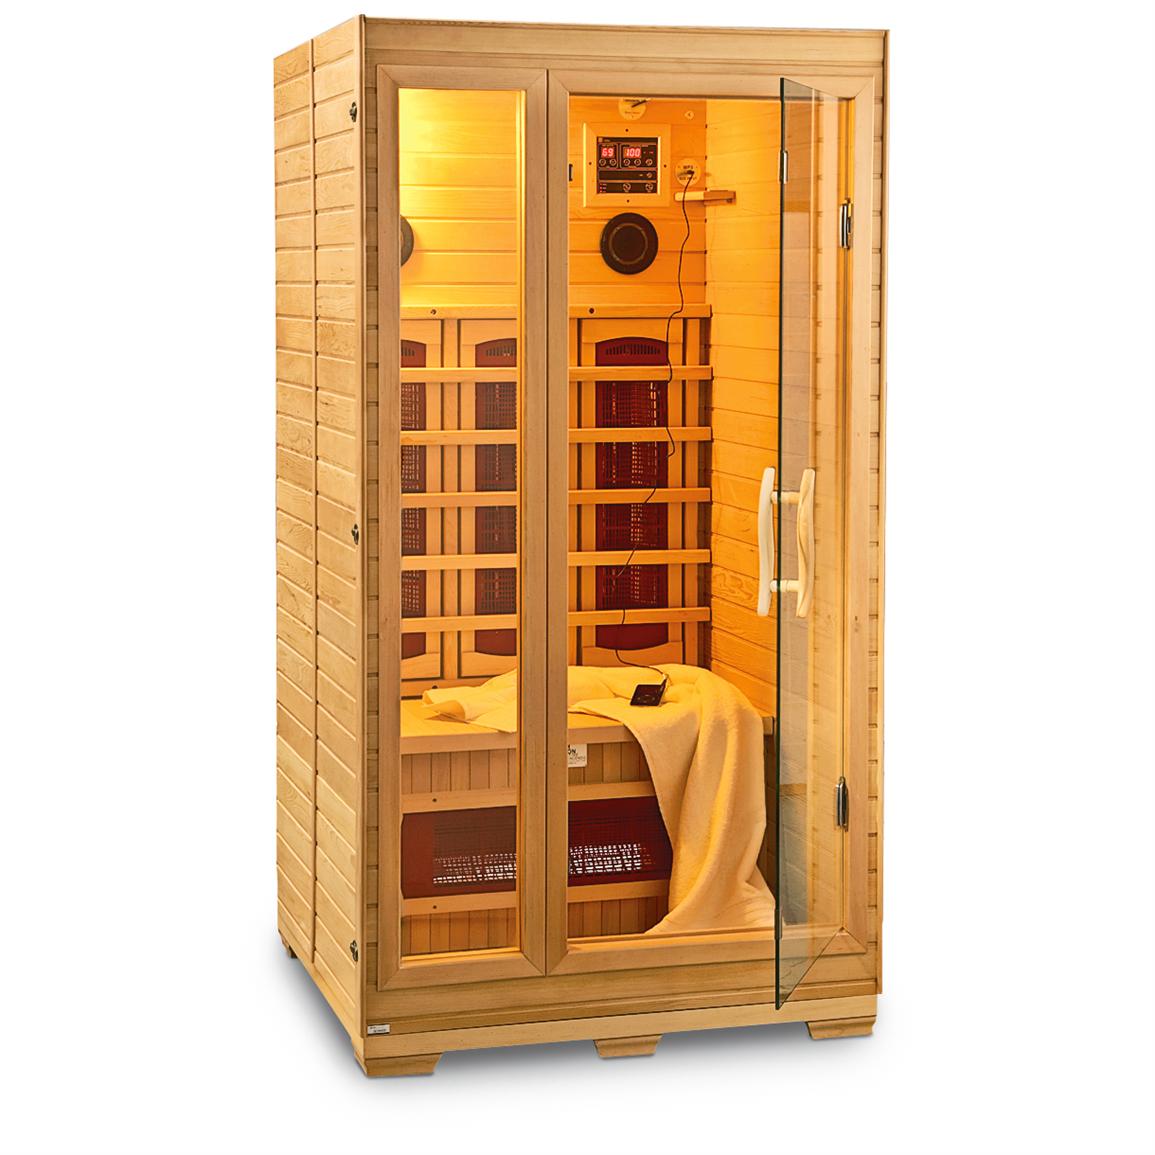 2 - person Infrared Sauna - 184371, Spas & Saunas at Sportsman's Guide